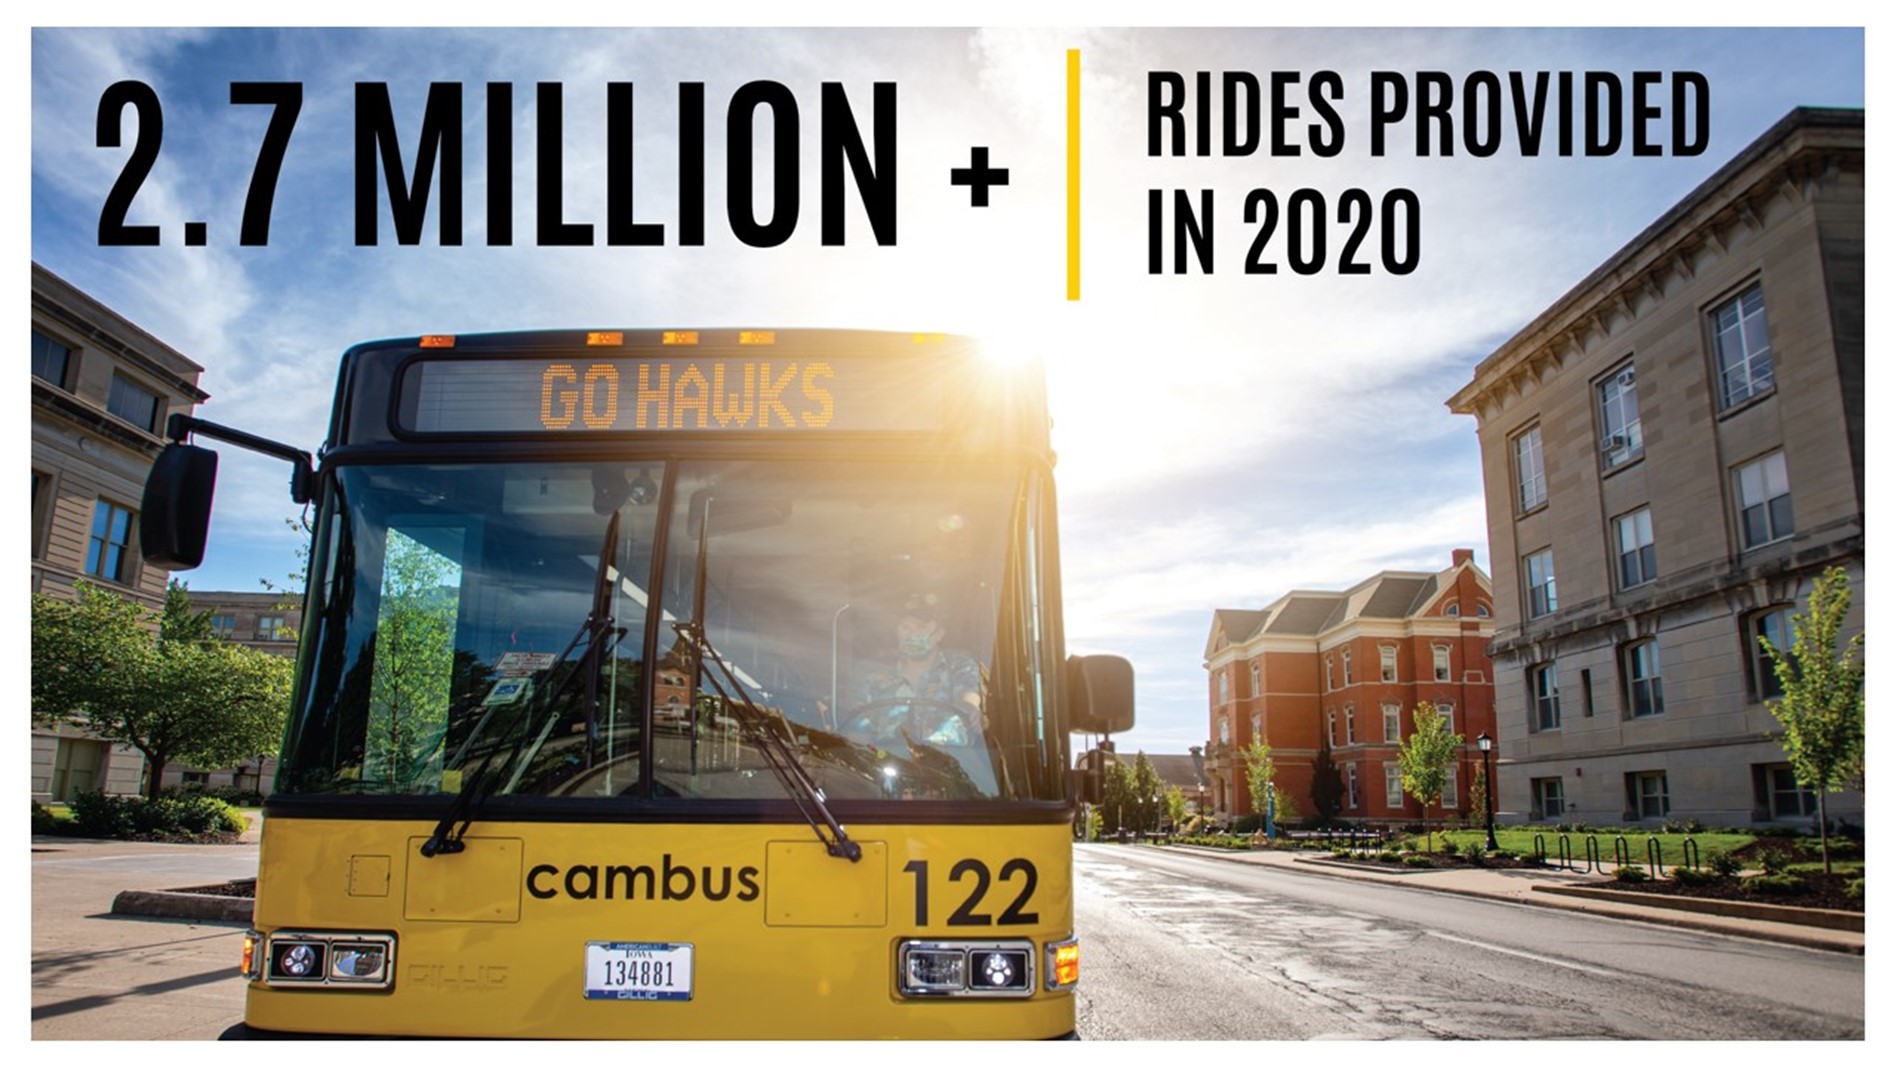 Cambus provided 2.7 million rides in 2020